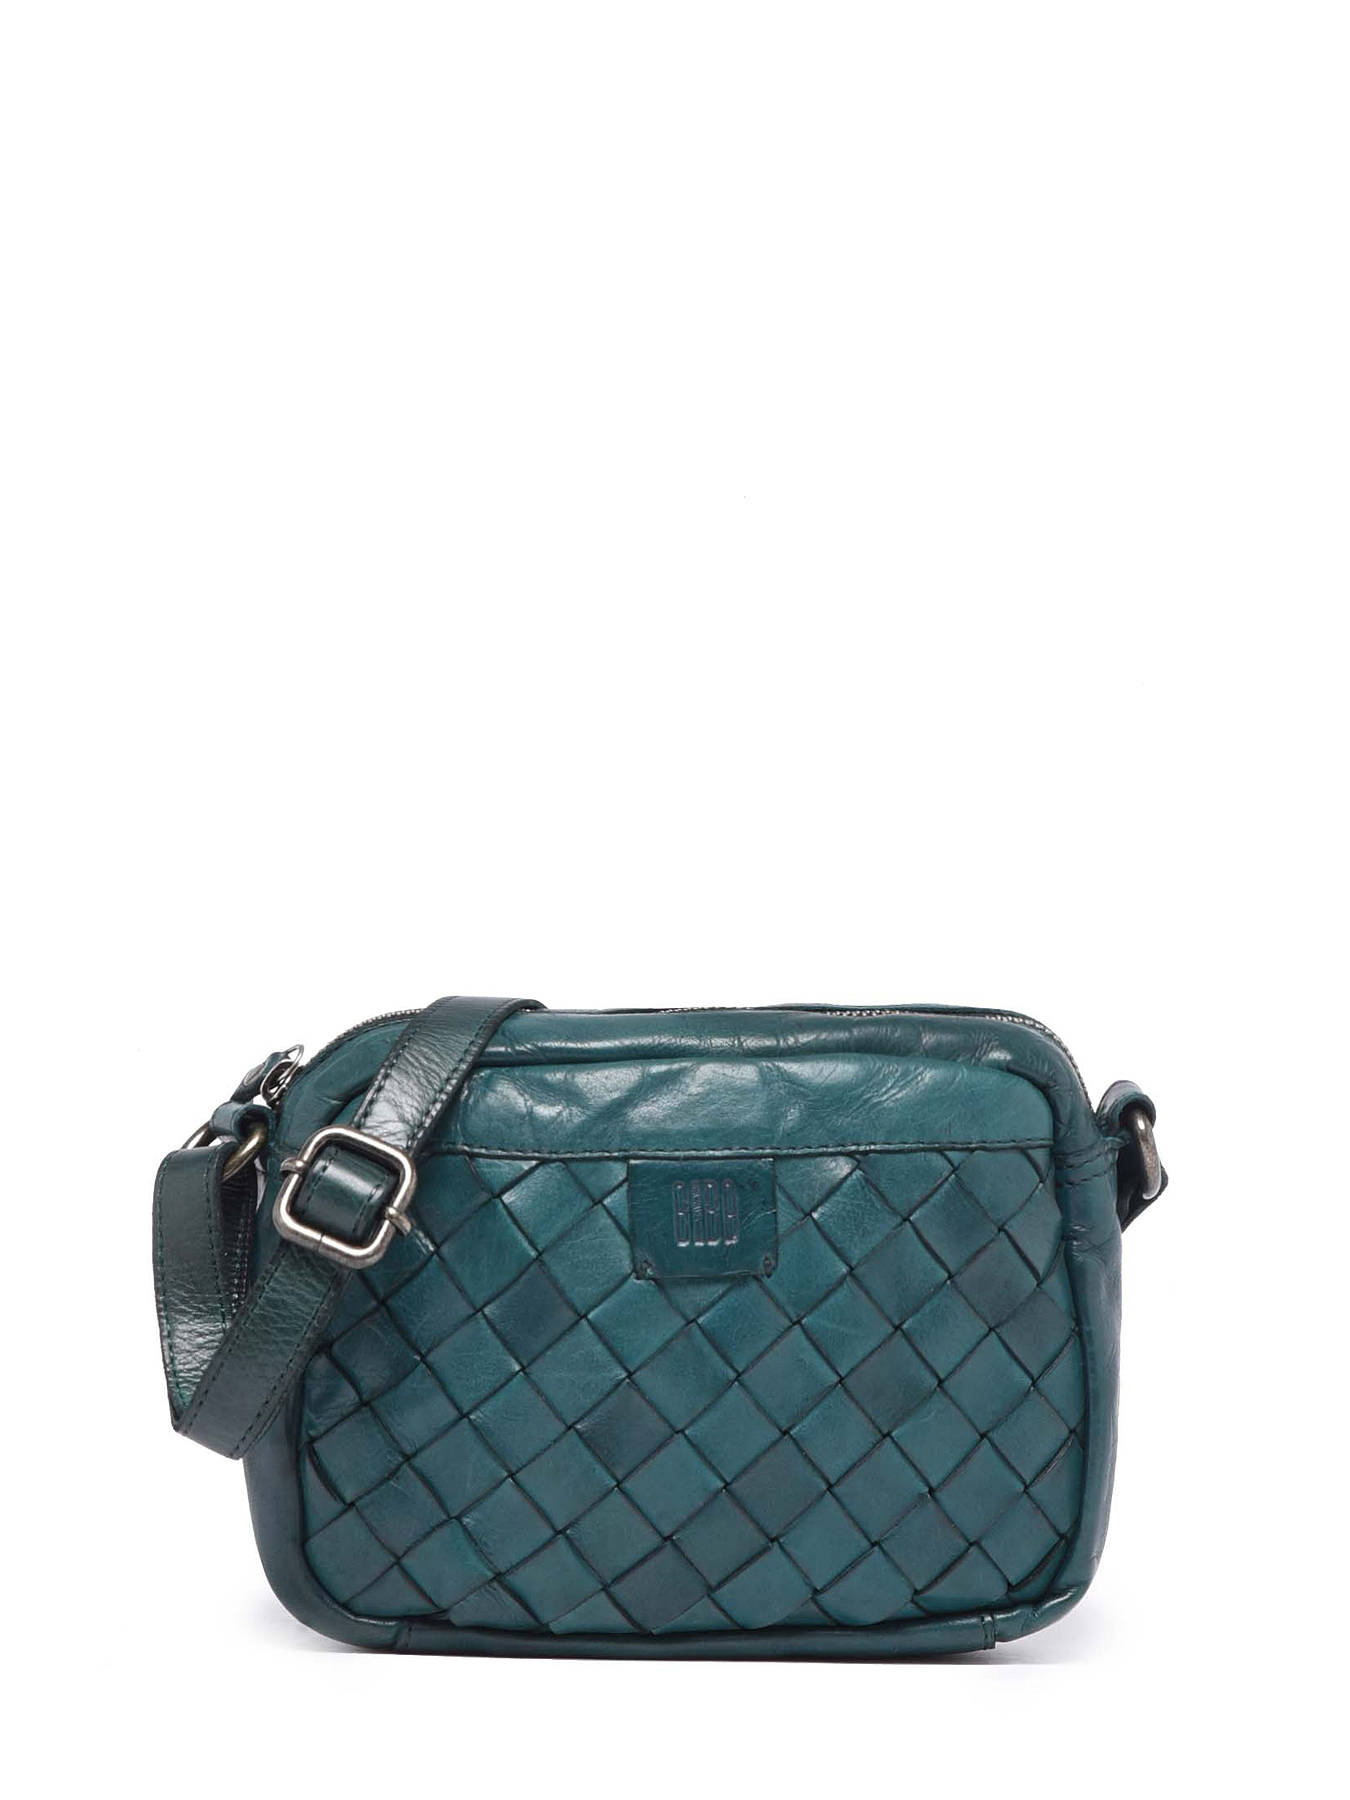 BiBA Womens Constance Black Leather Bag for sale online | eBay